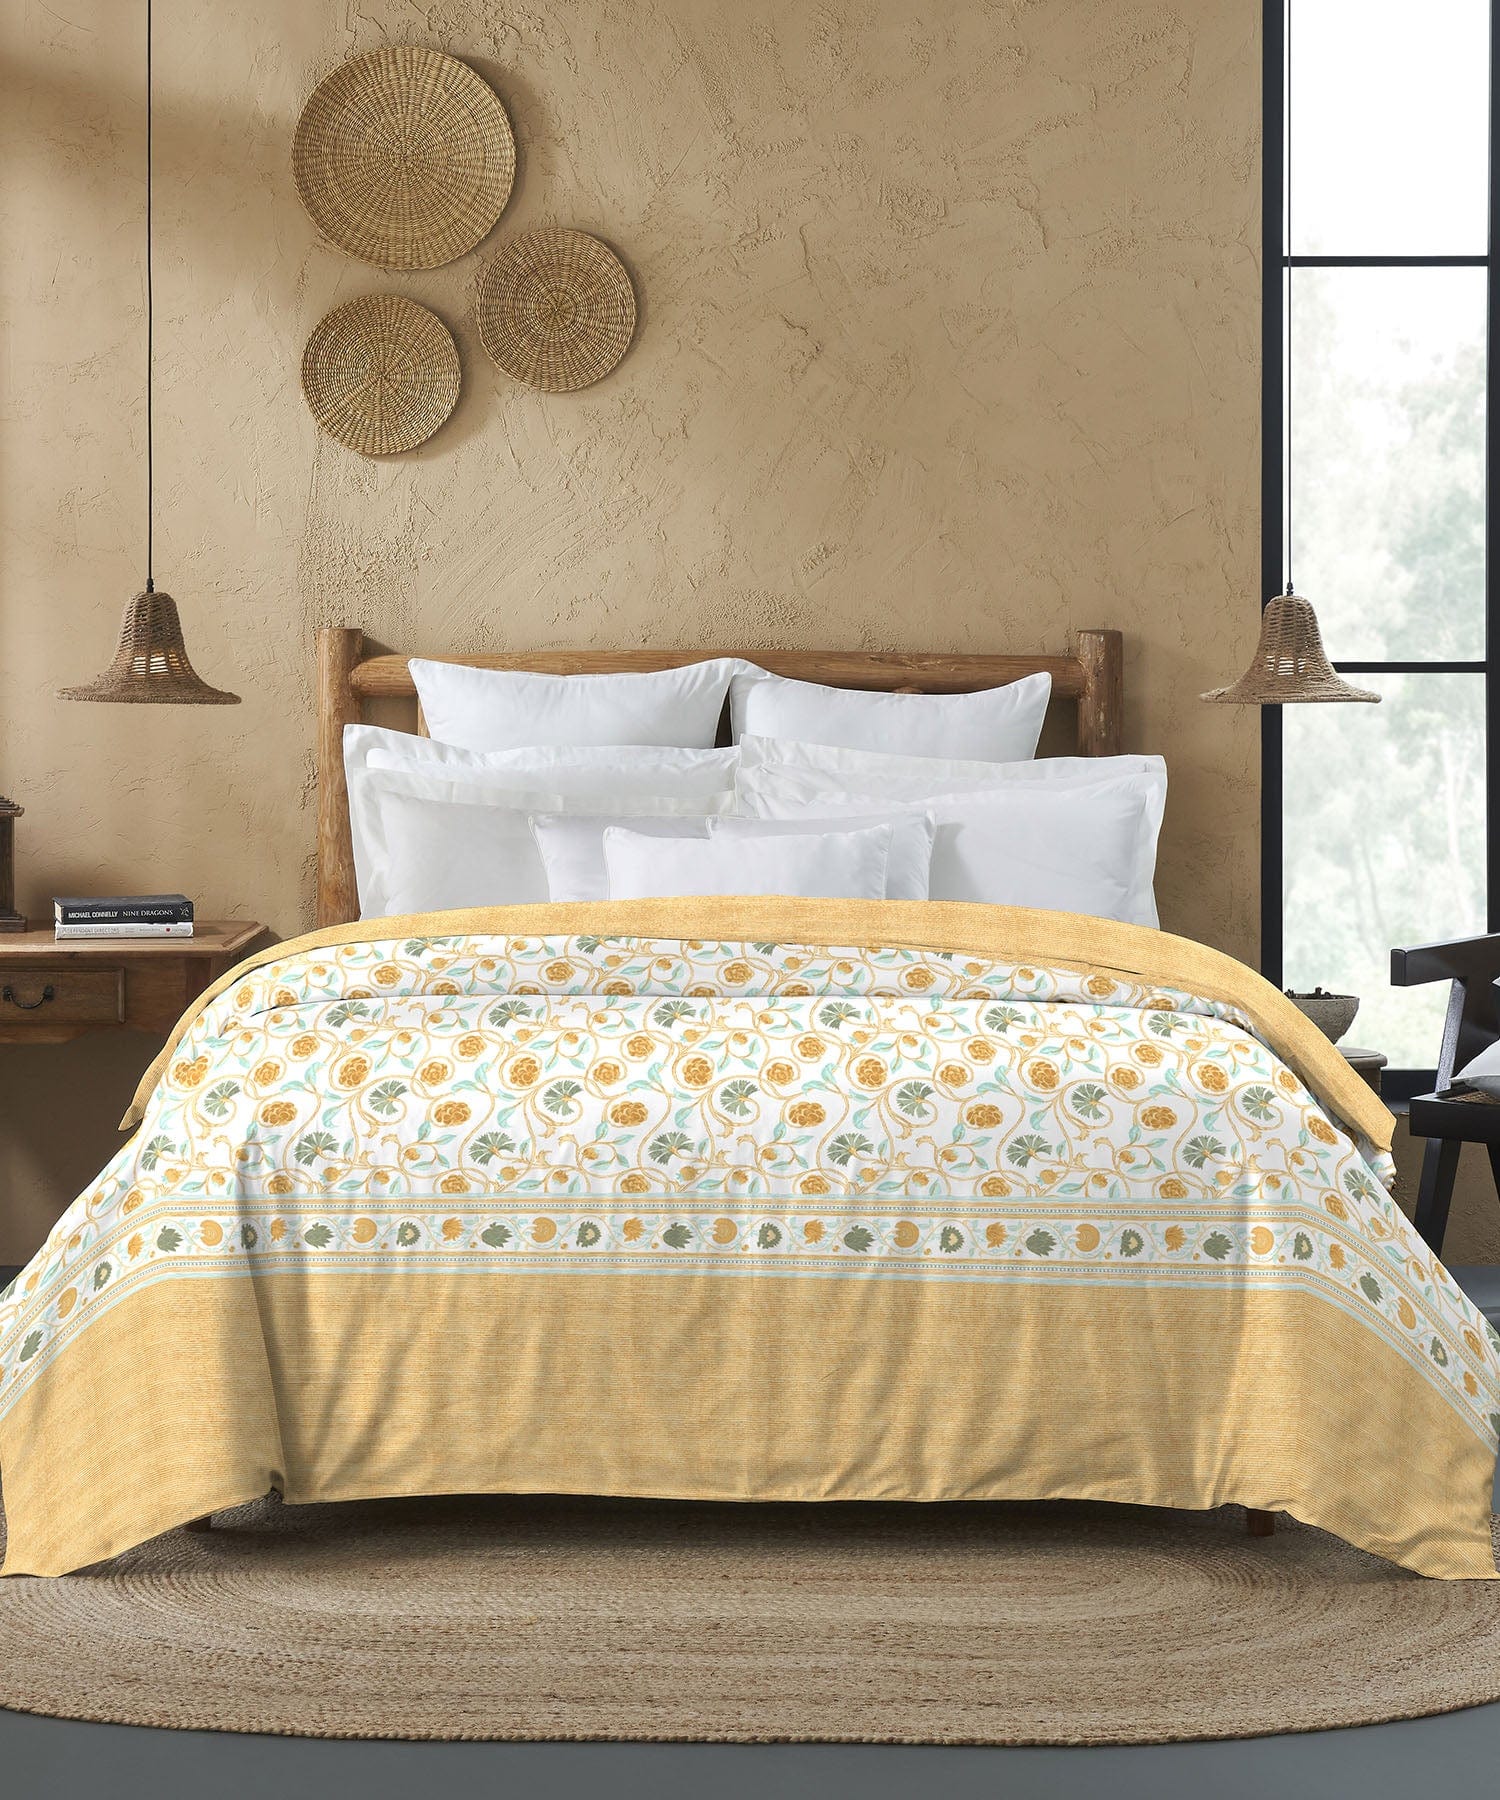 King Comforter ₹3599/-